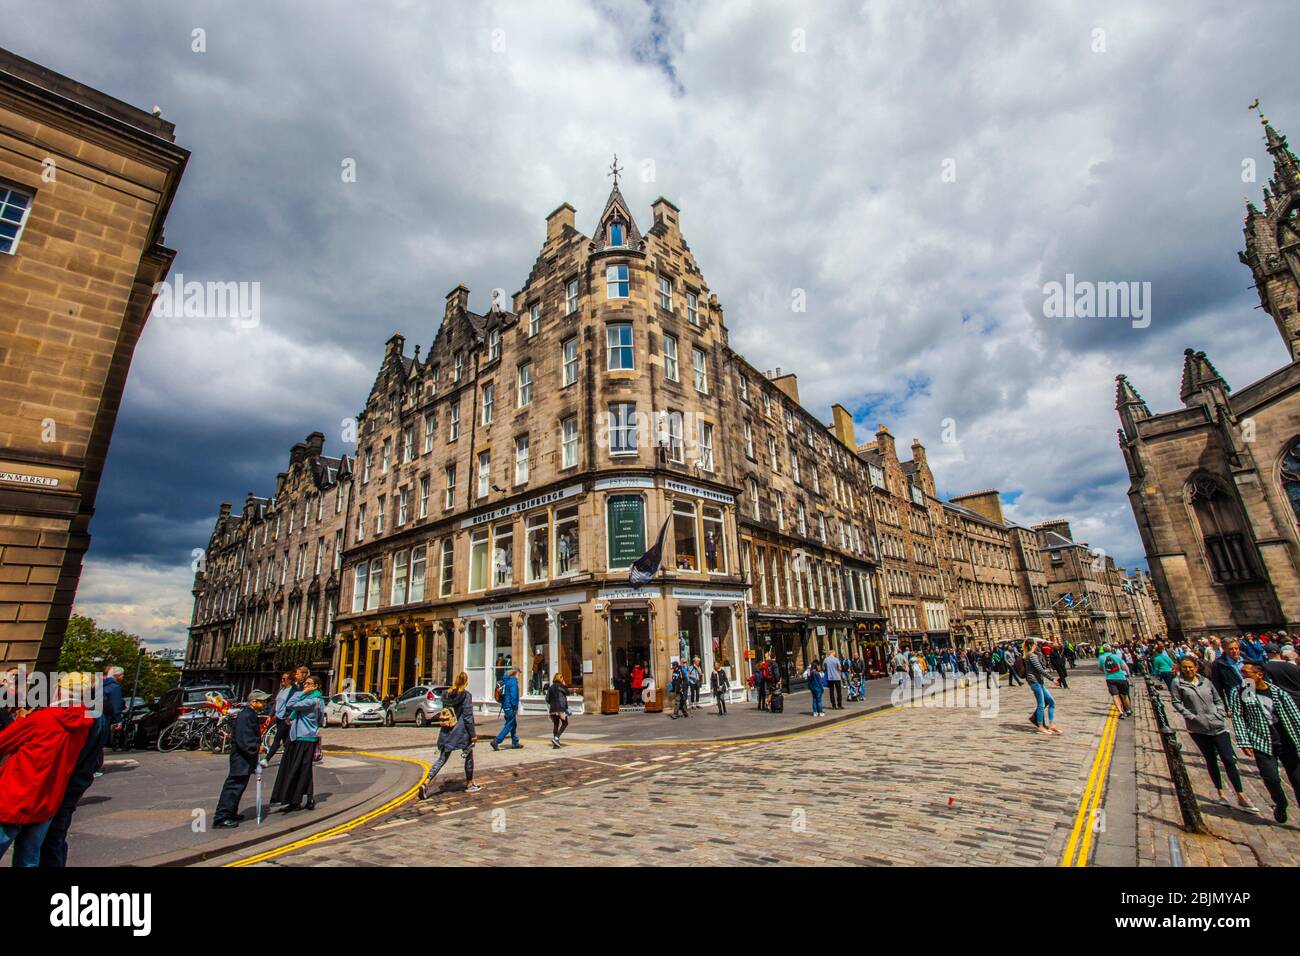 Buildings, High street, Royal Mile, Old Town, Edinburgh, Scotland, United Kingdom, Europe. Stock Photo